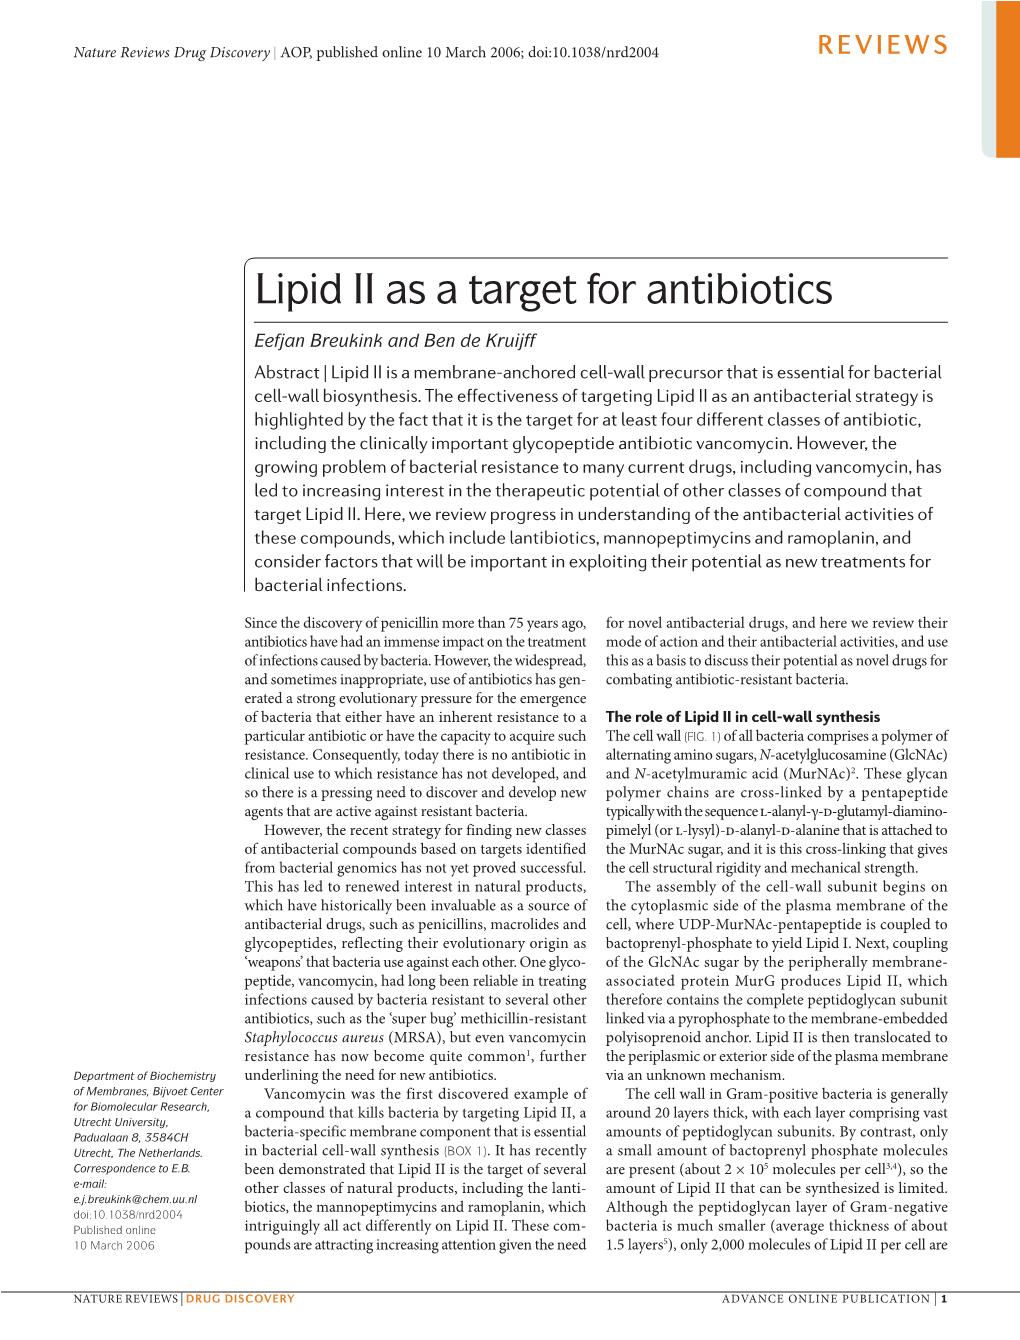 Lipid II As a Target for Antibiotics